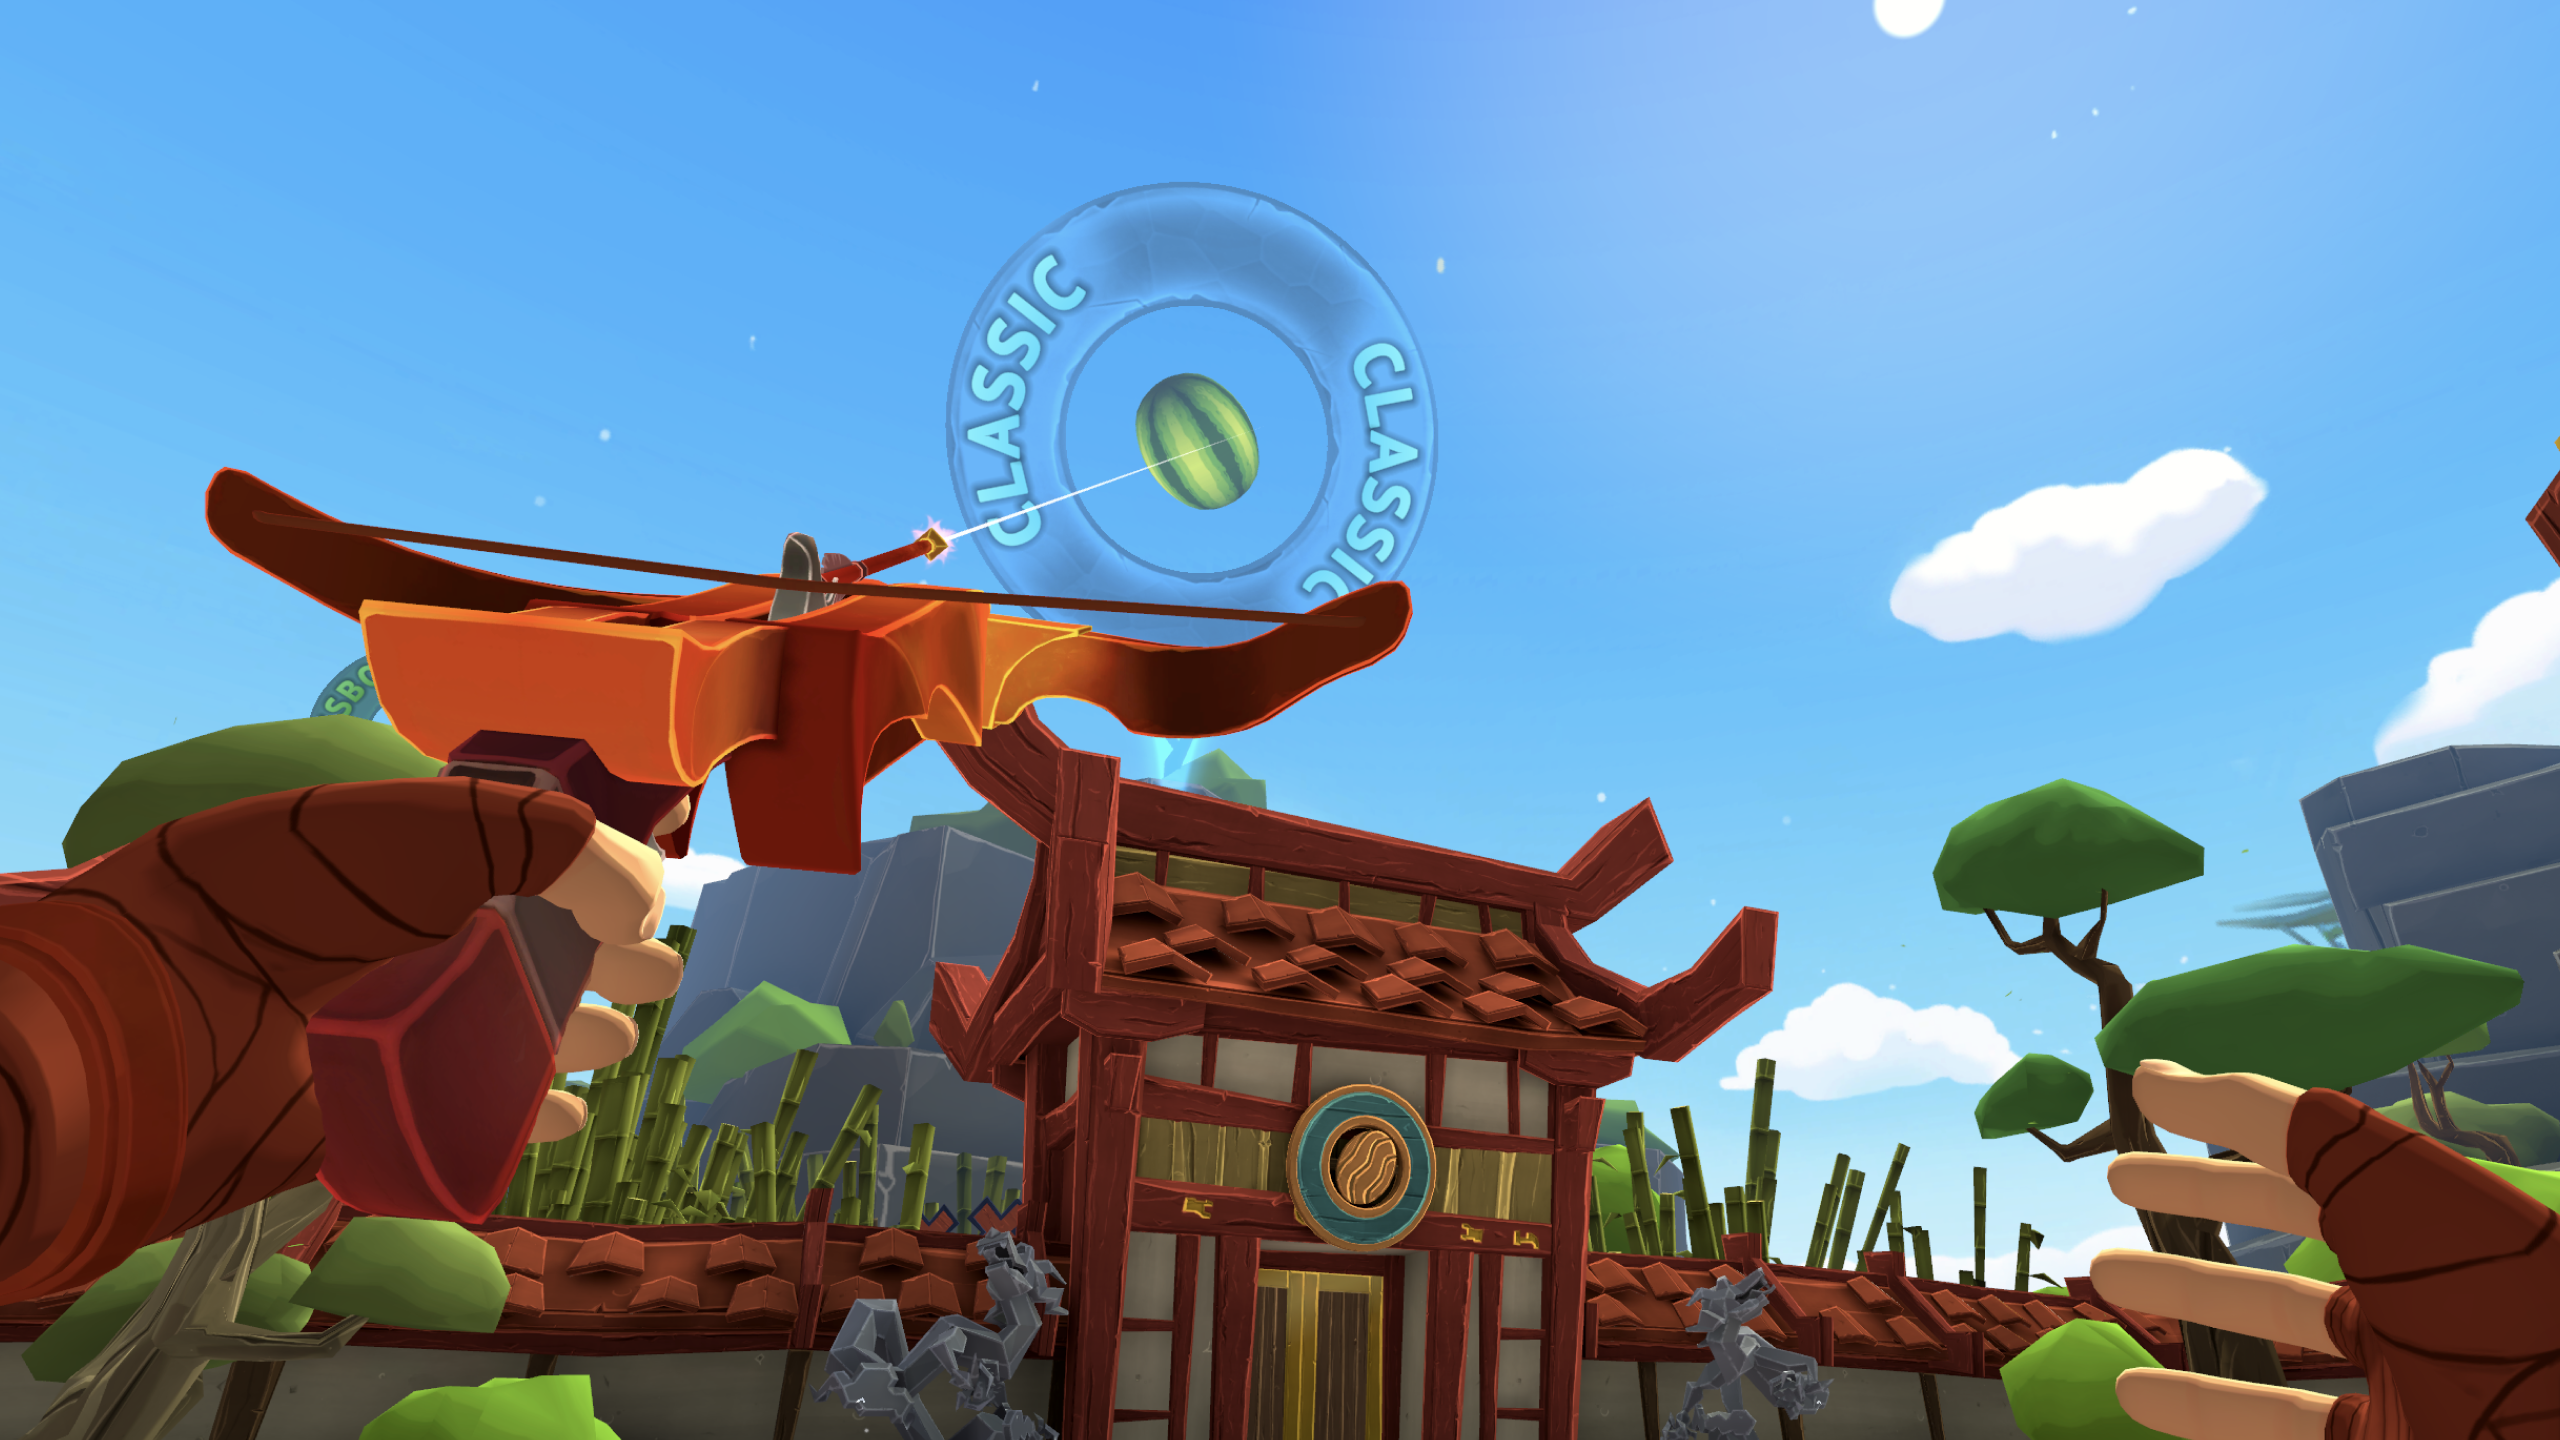 Fruit Ninja VR 2' Available For Early Playtesting - VRScout